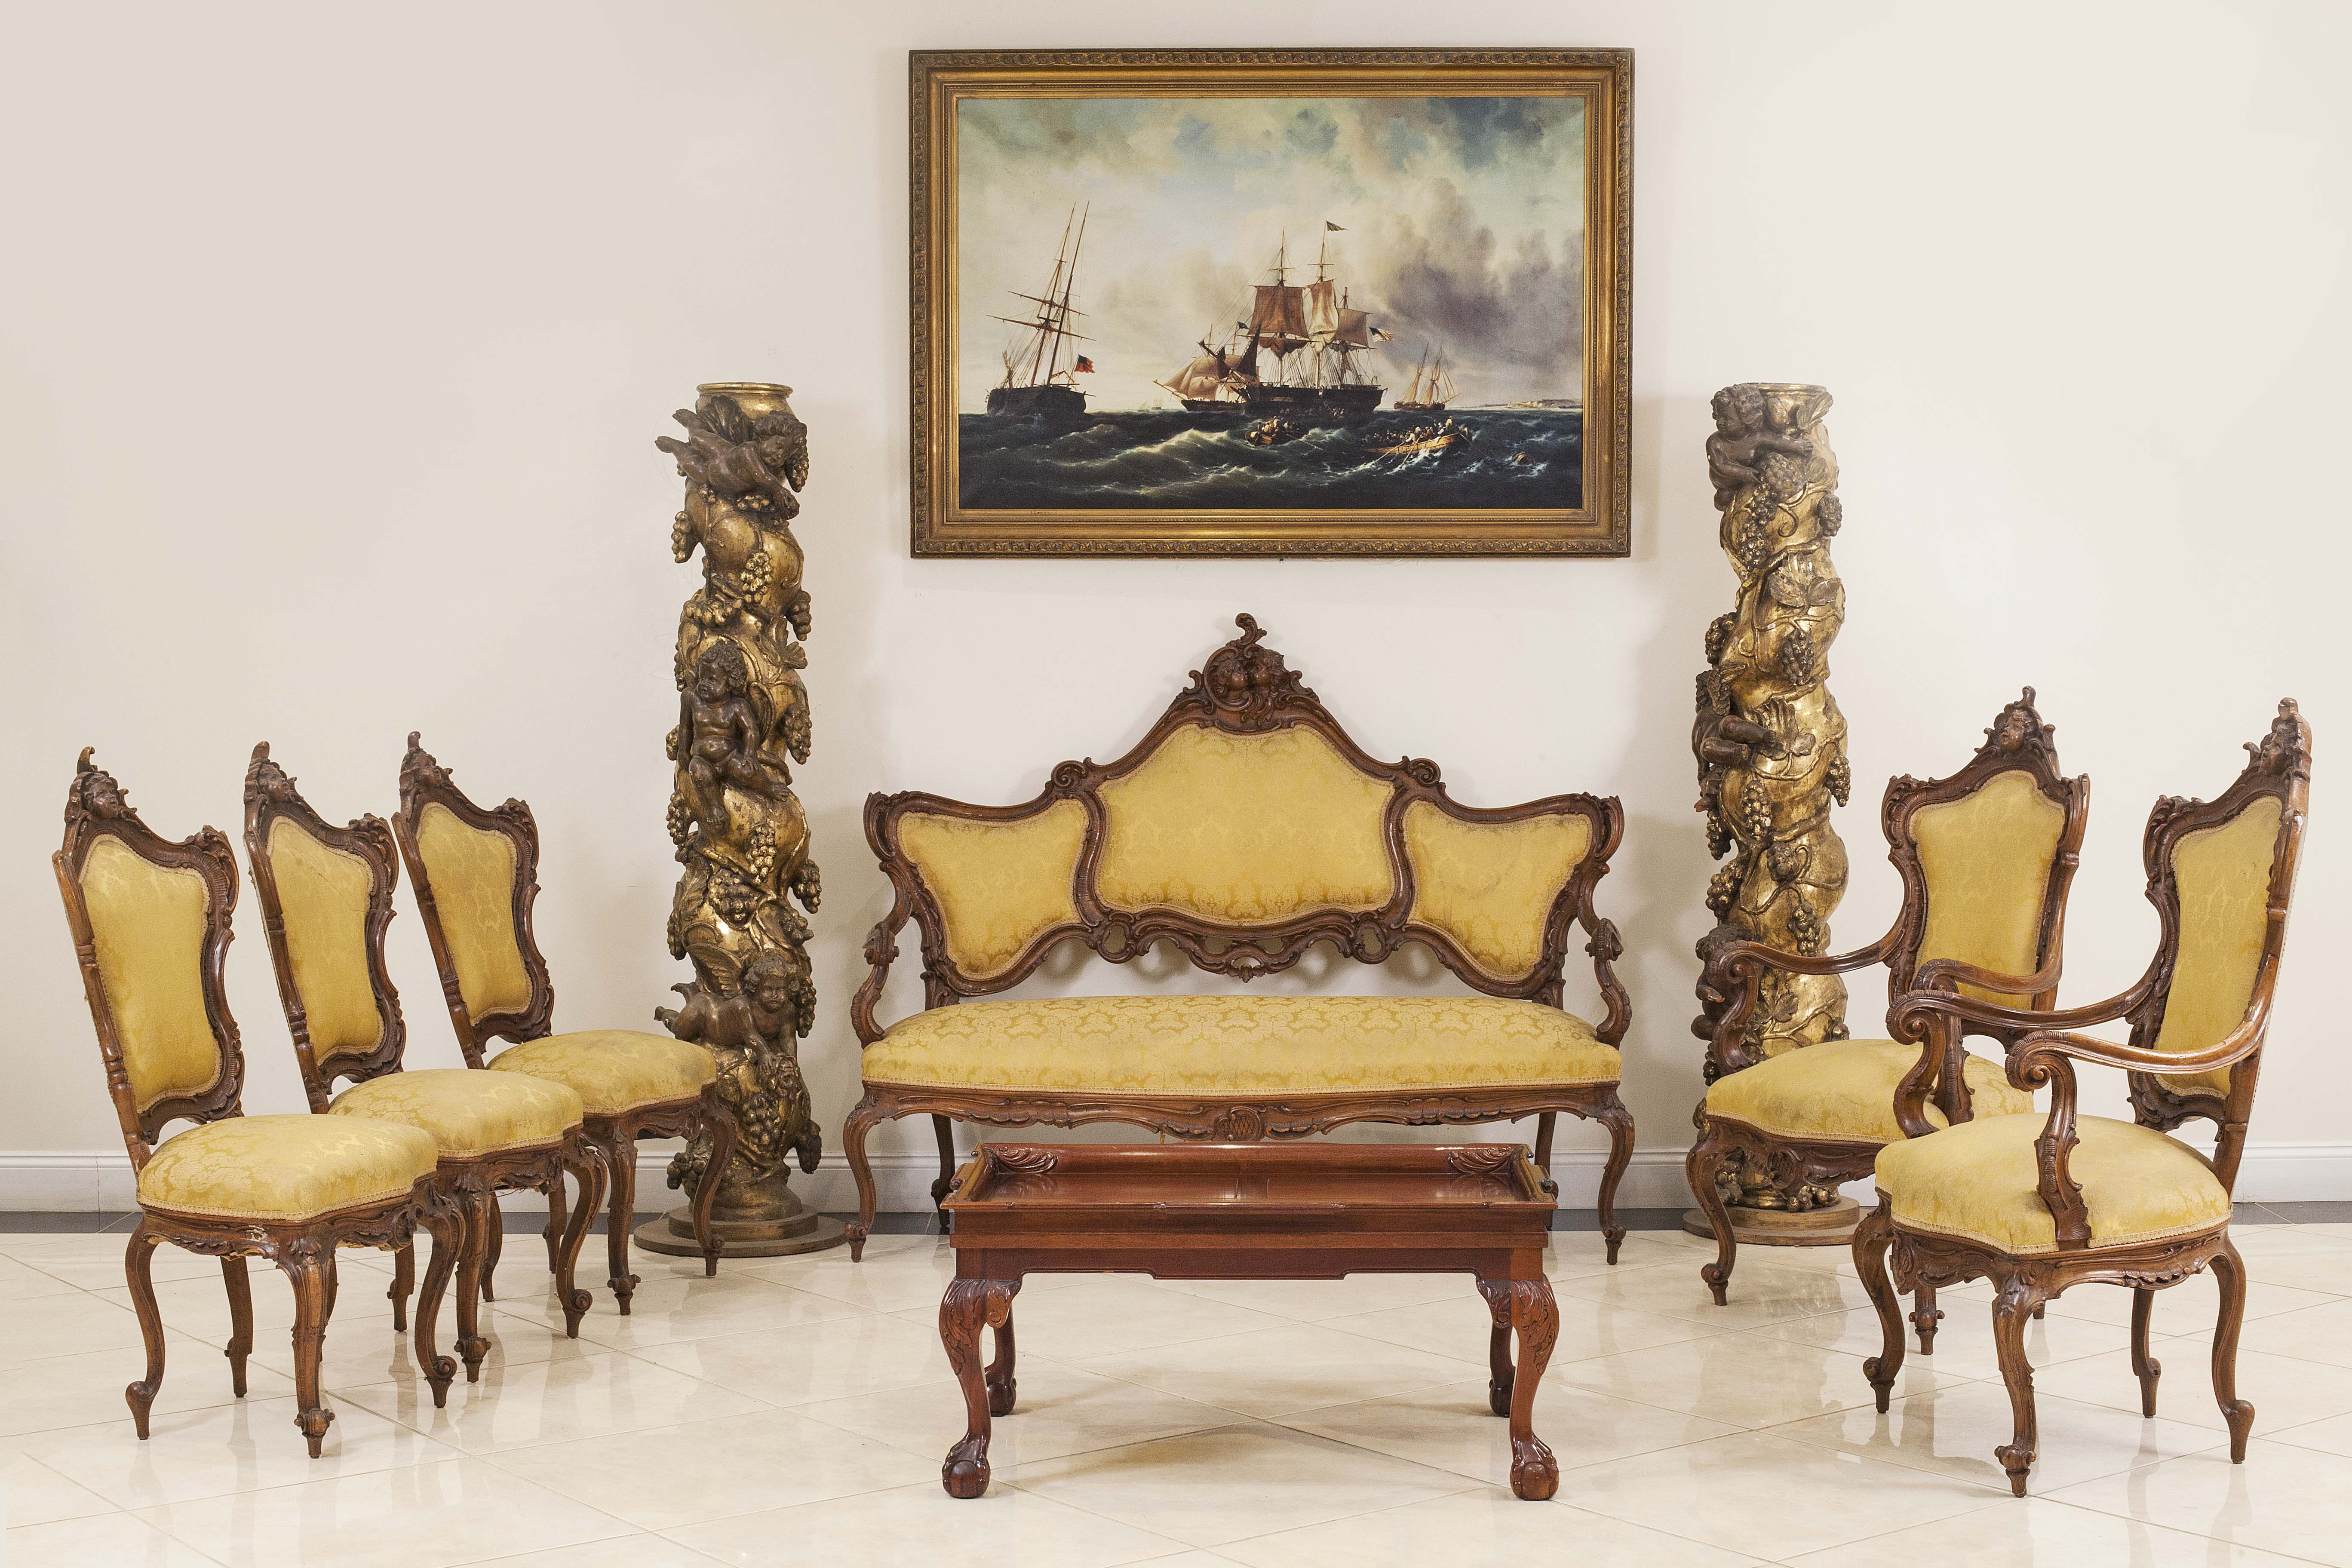 italian living room furniture sets